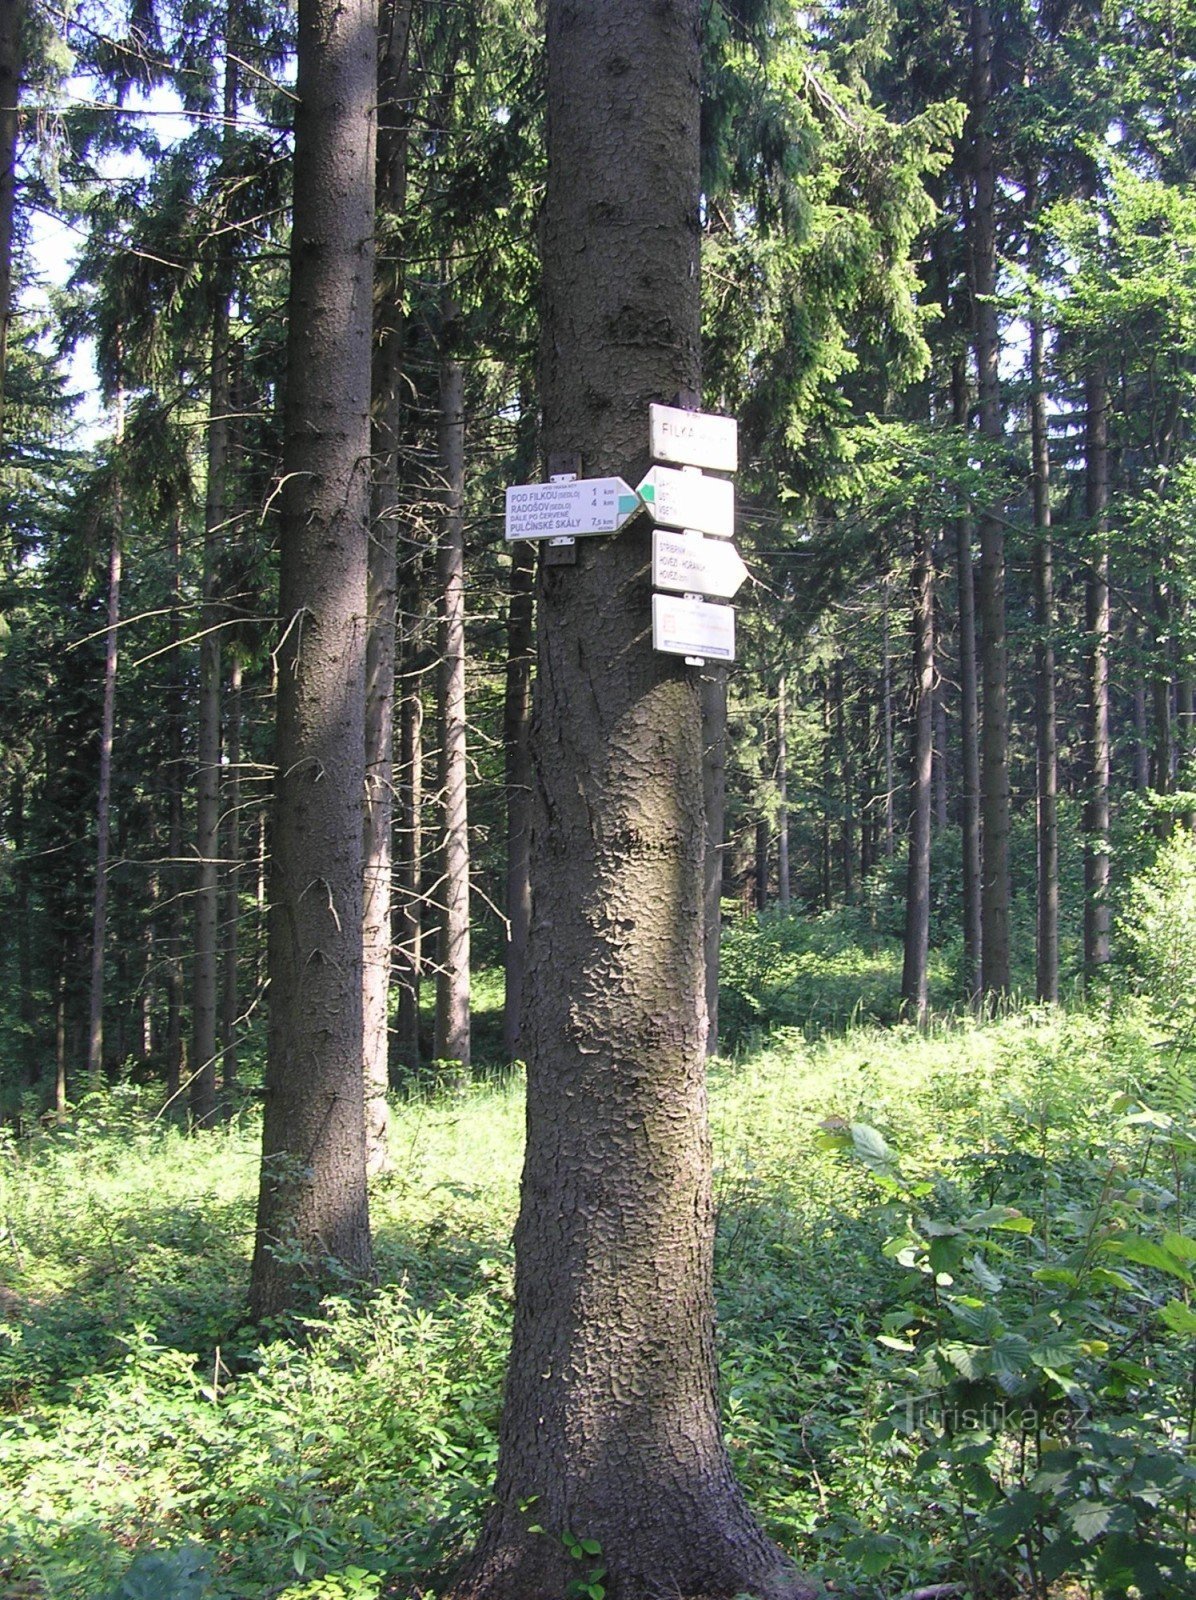 Filka signpost (July 2009)